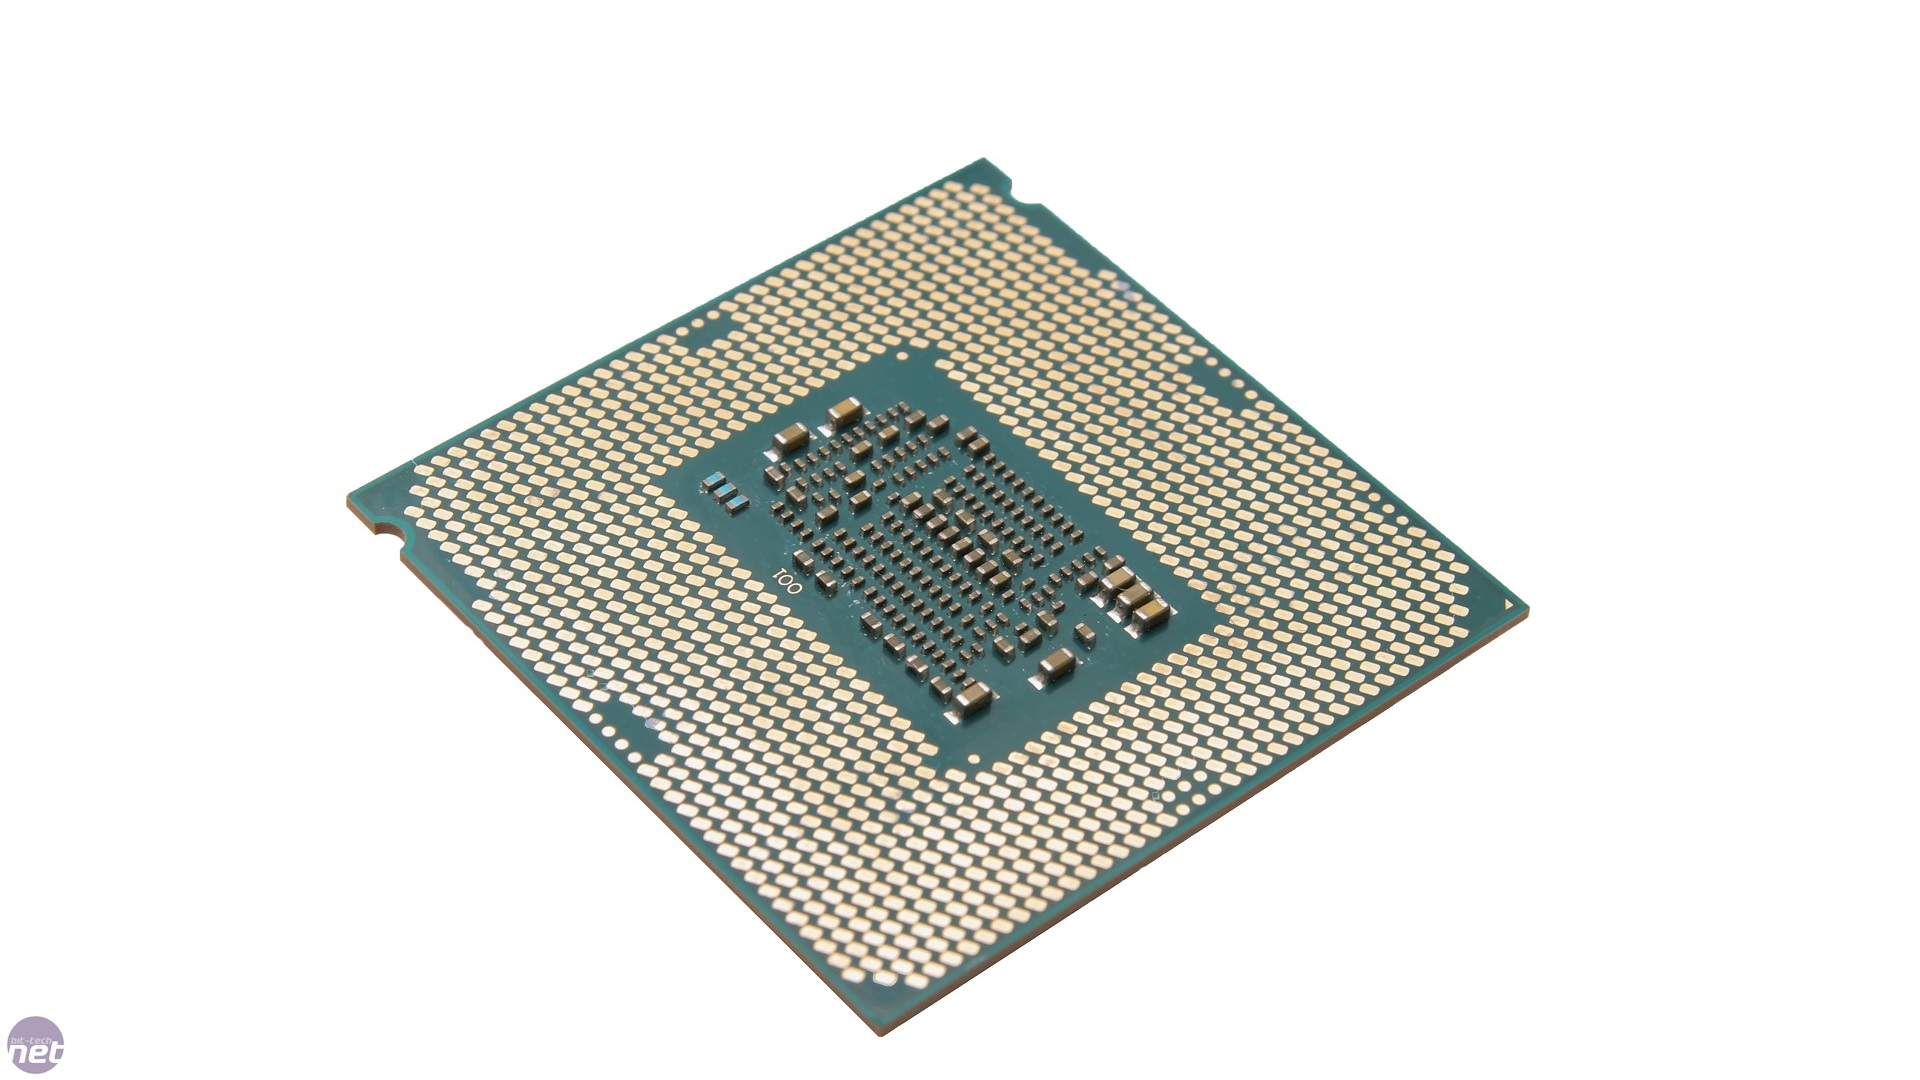 Intel Core i7-7700K, Core i5-7600K (Kaby Lake) and Z270 Chipset